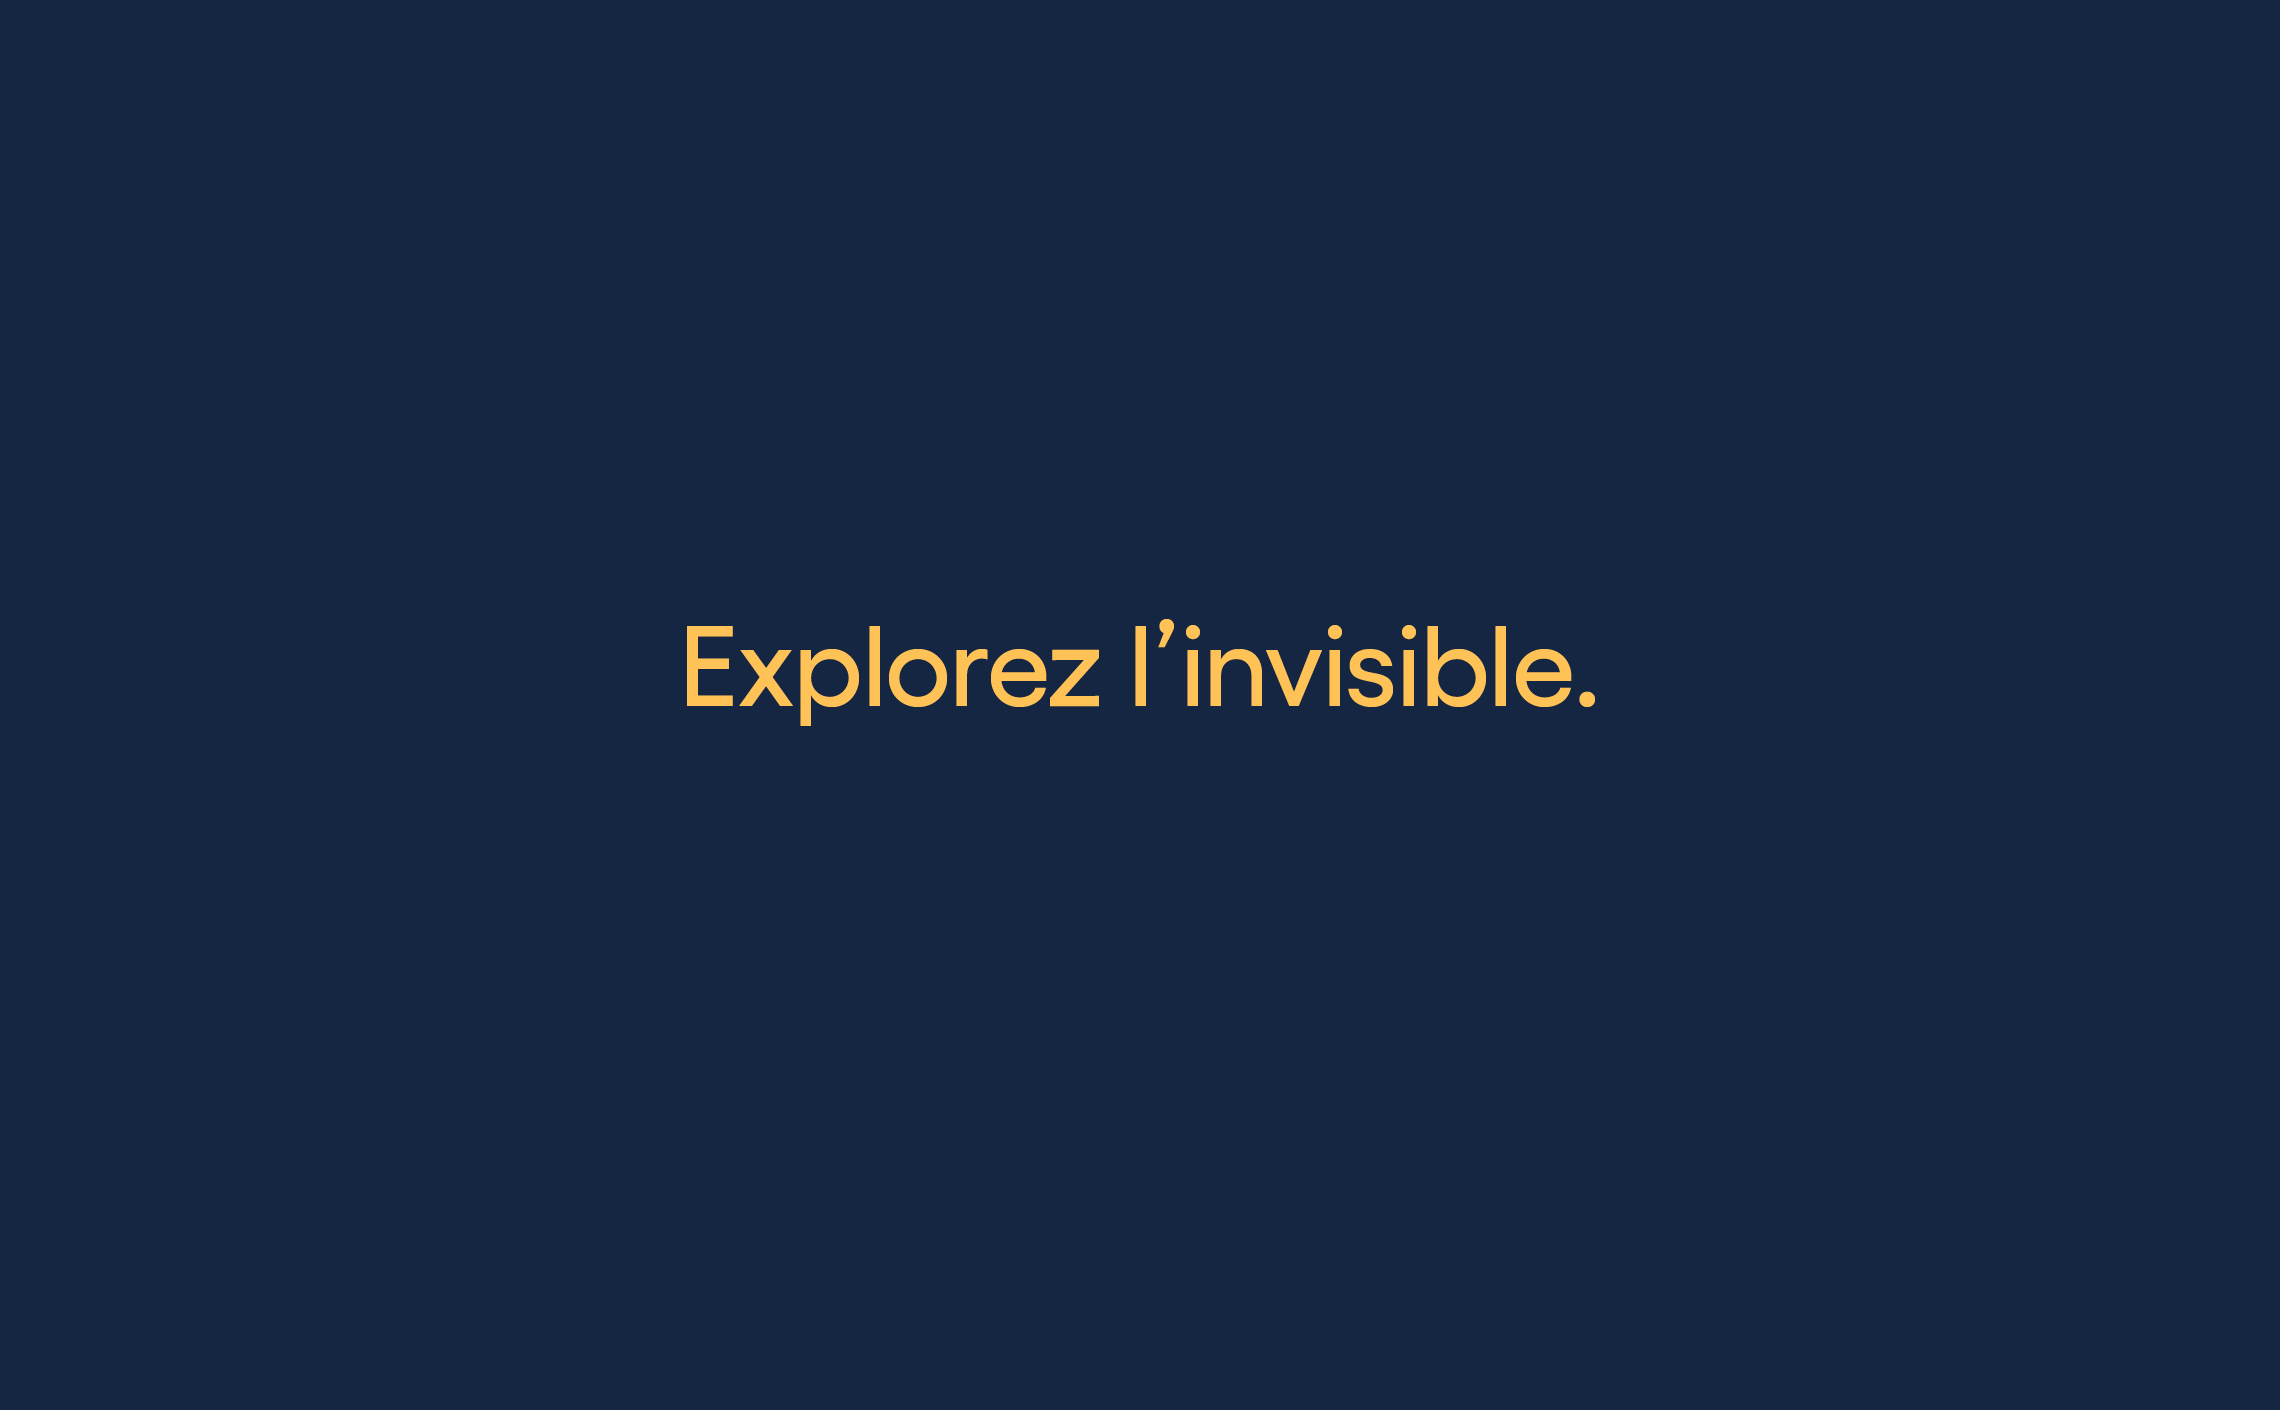 baseline slogan explorez l'invisible